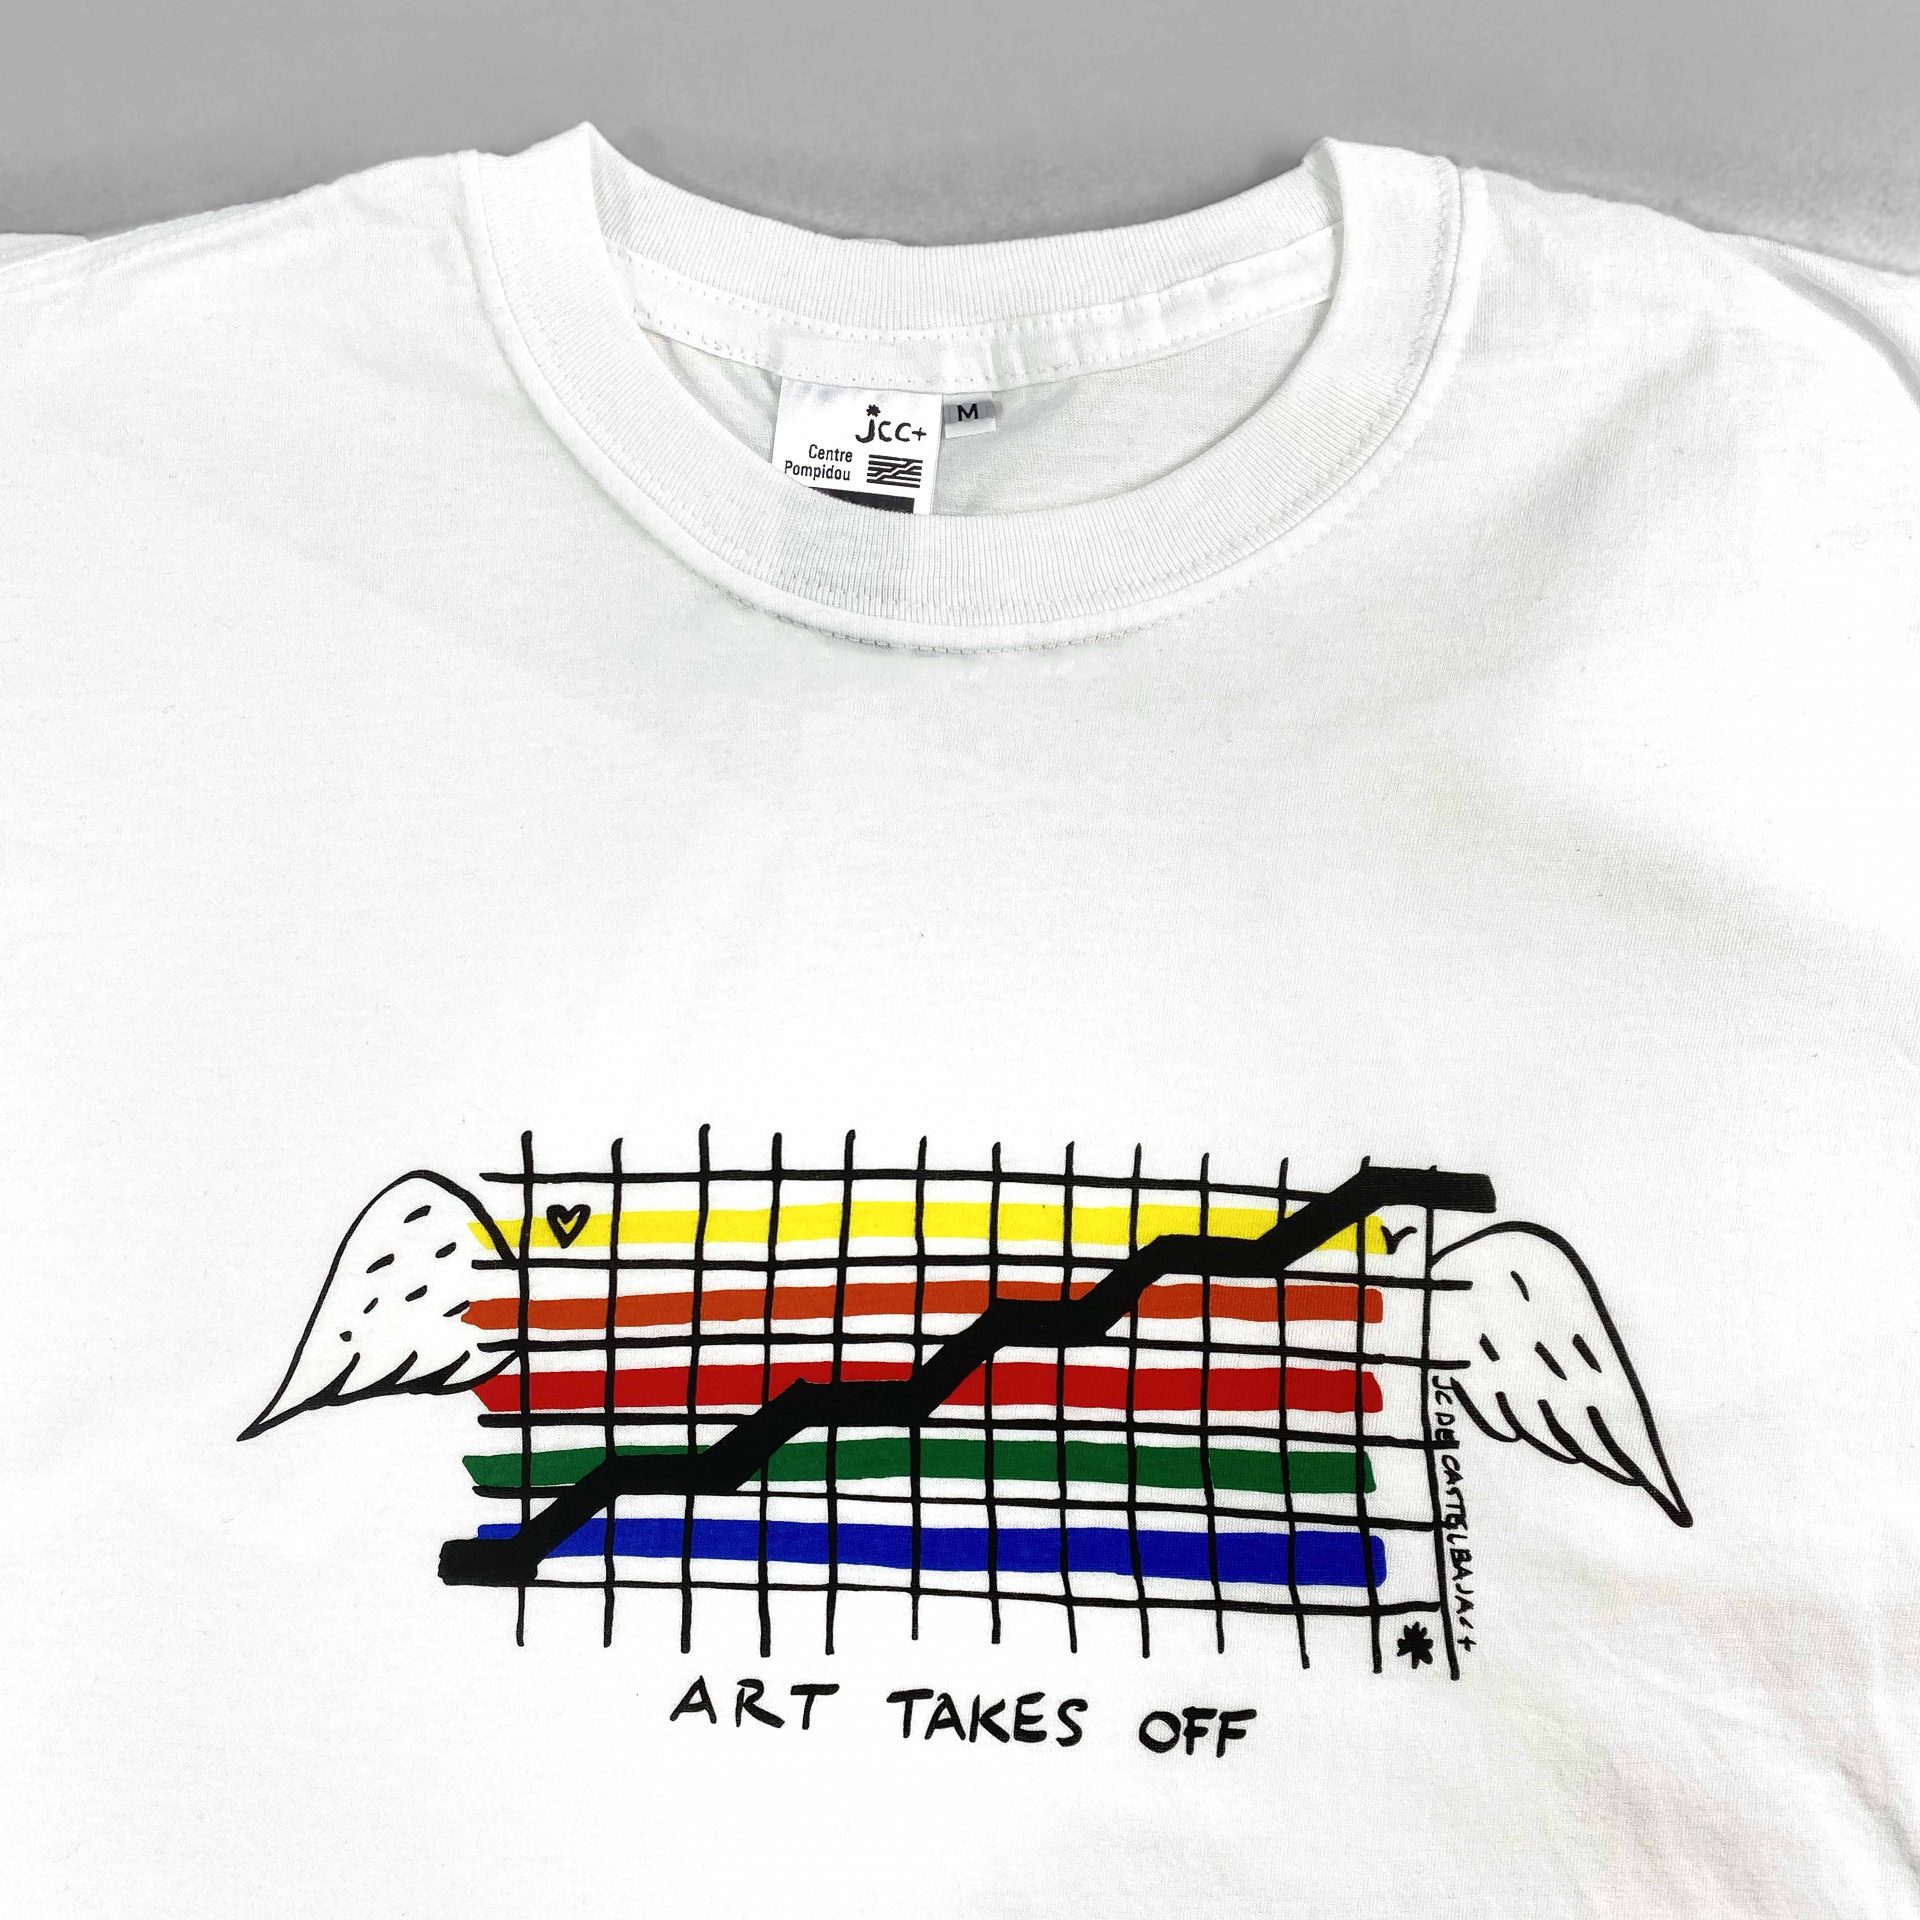 screen printed art takes off t-shirt designed for the Pompidou Centre Paris